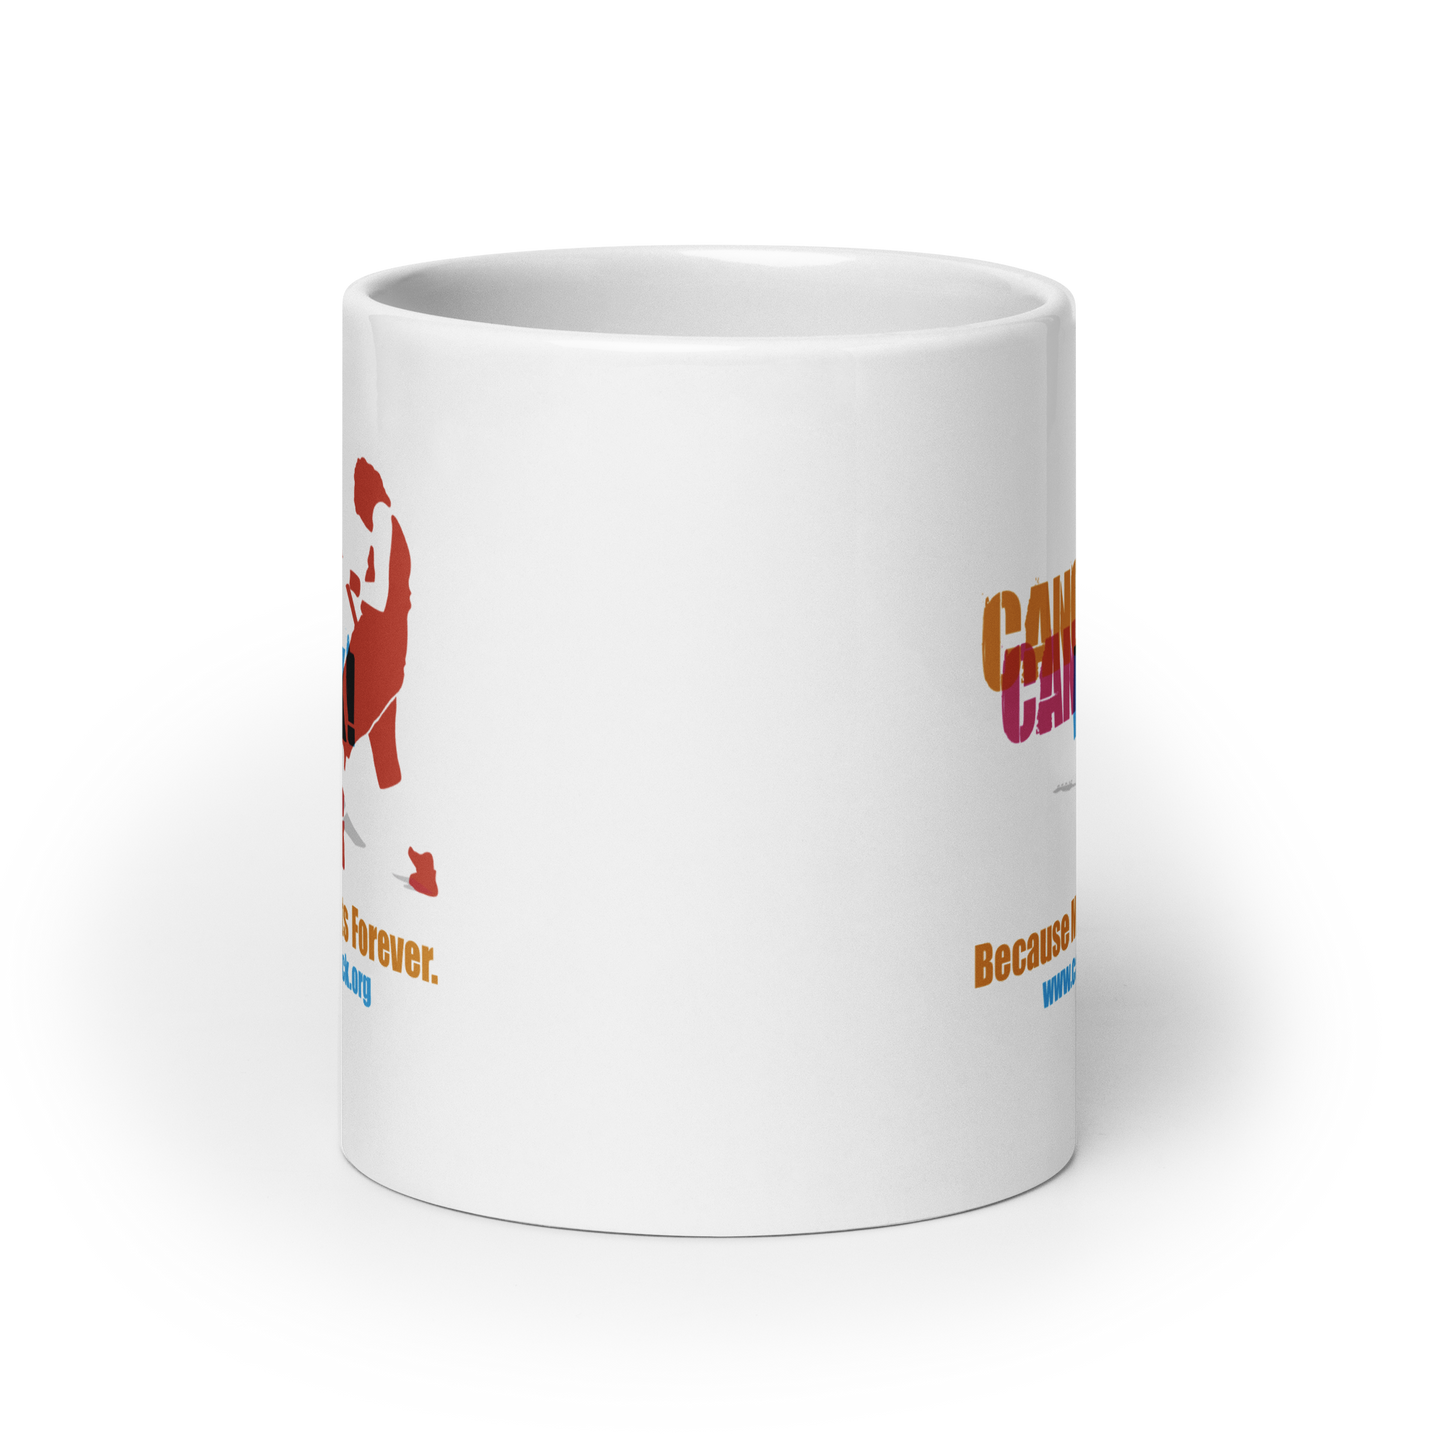 Tableware - Mug - CCR Logo